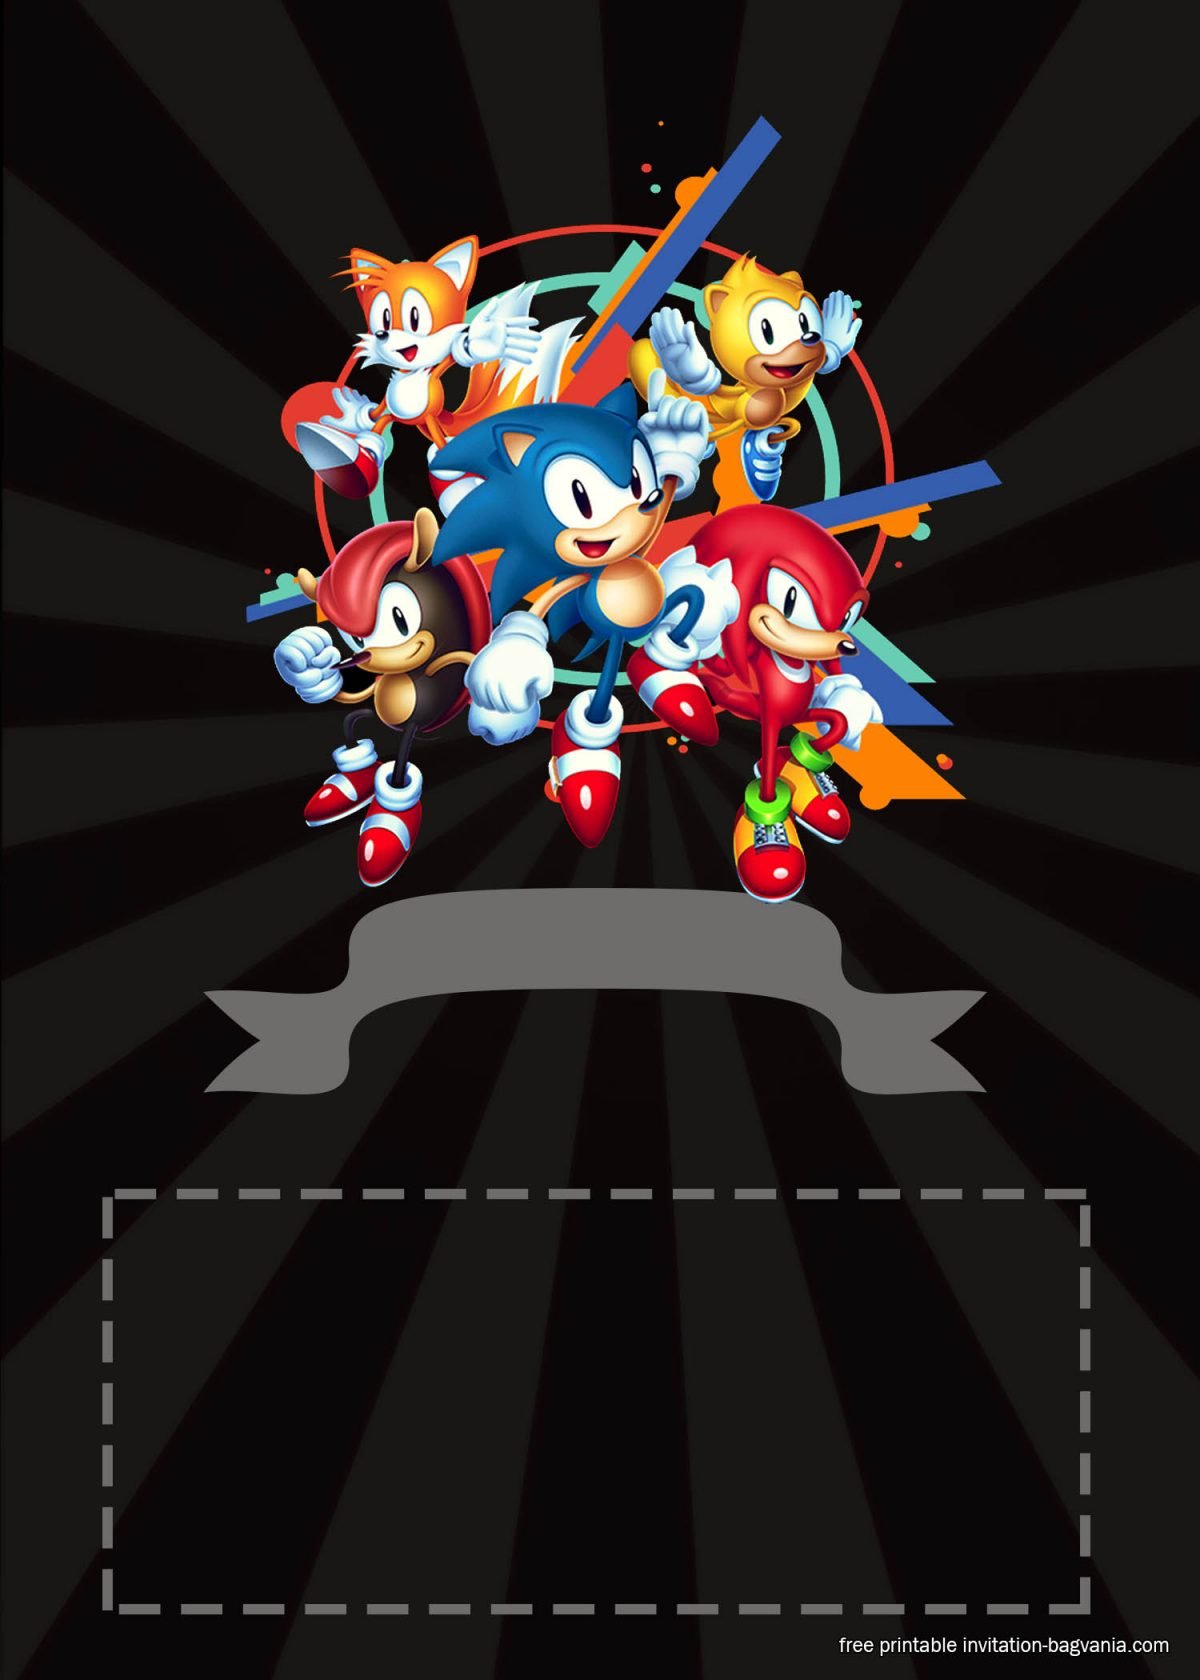 FREE Sonic the Hedgehog Invitation Templates FREE Printable Birthday